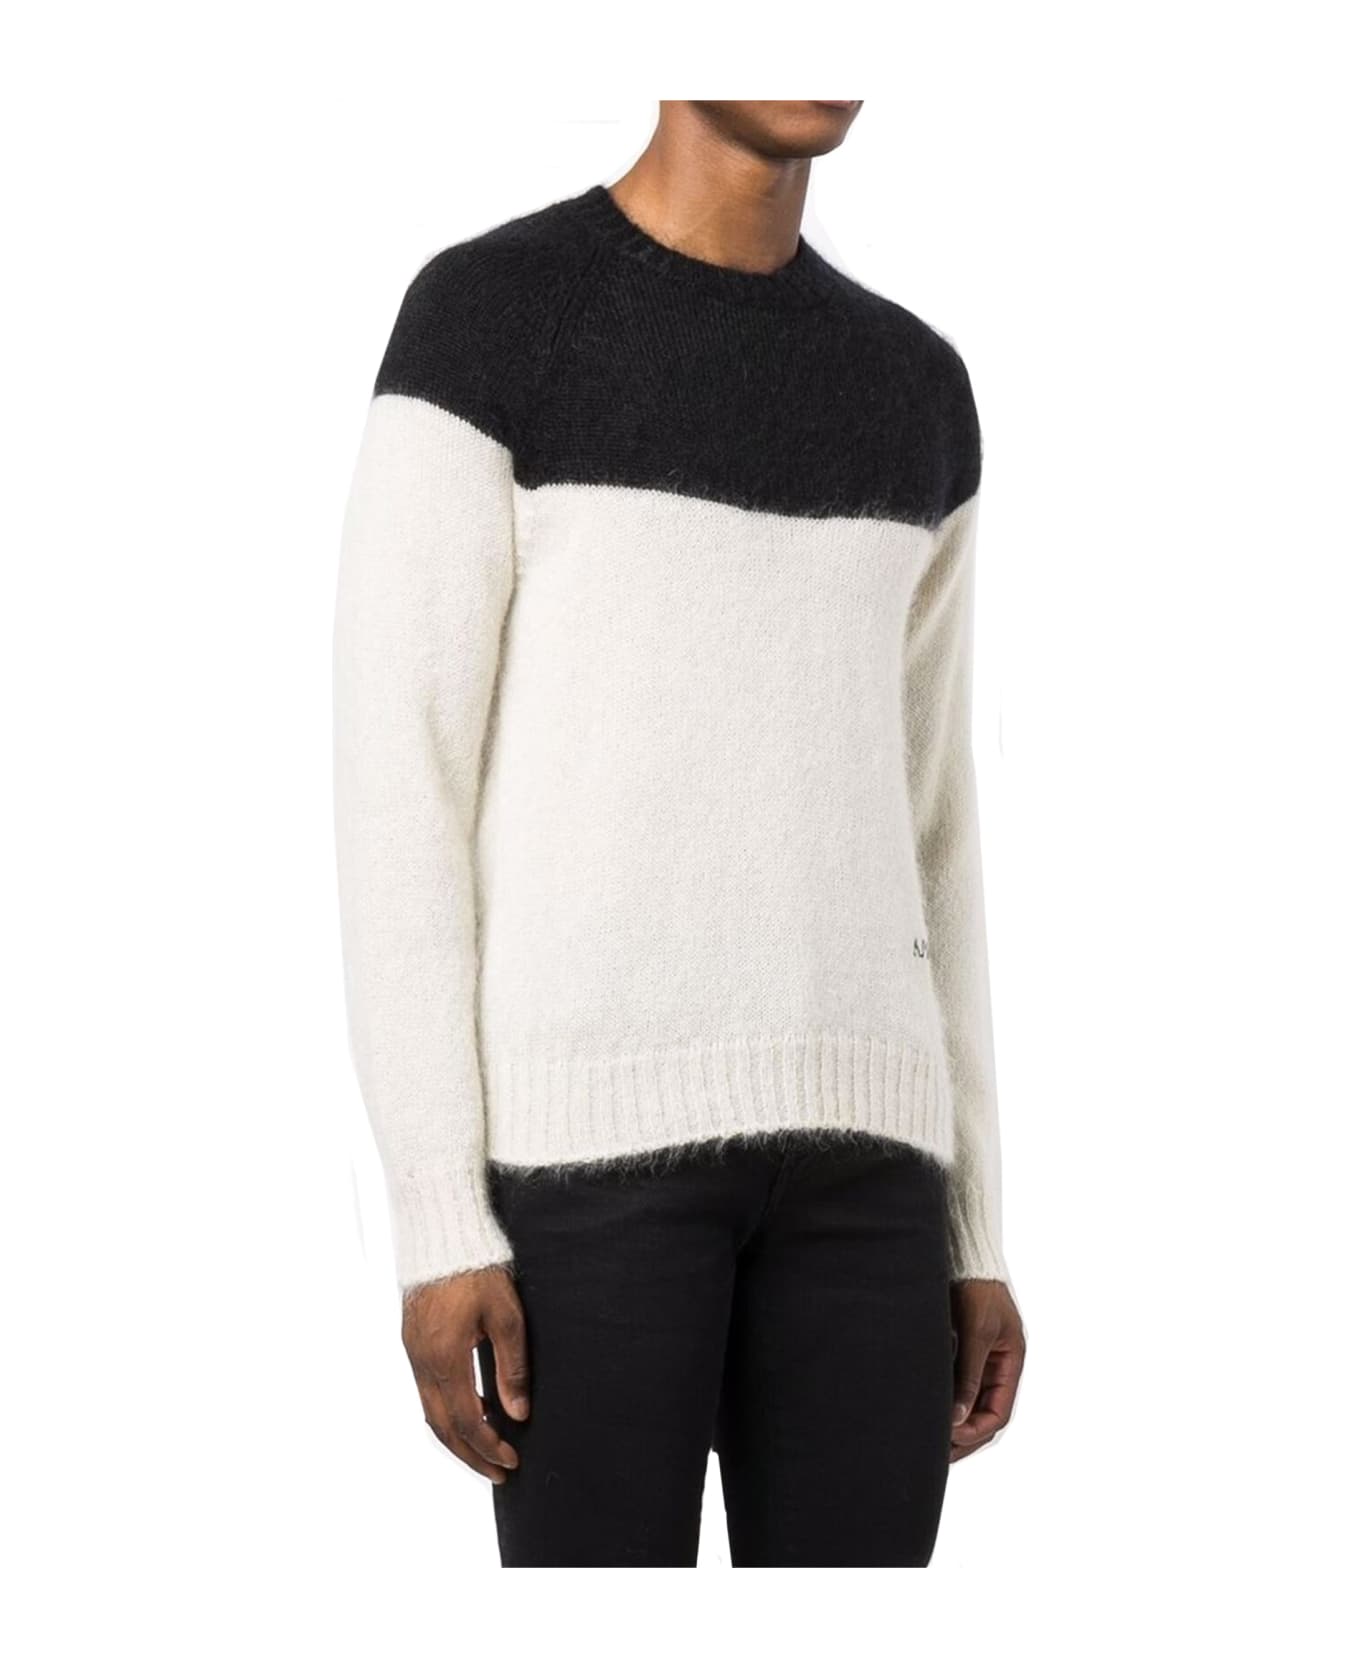 Alexander McQueen Gragon Wool Sweater - Black